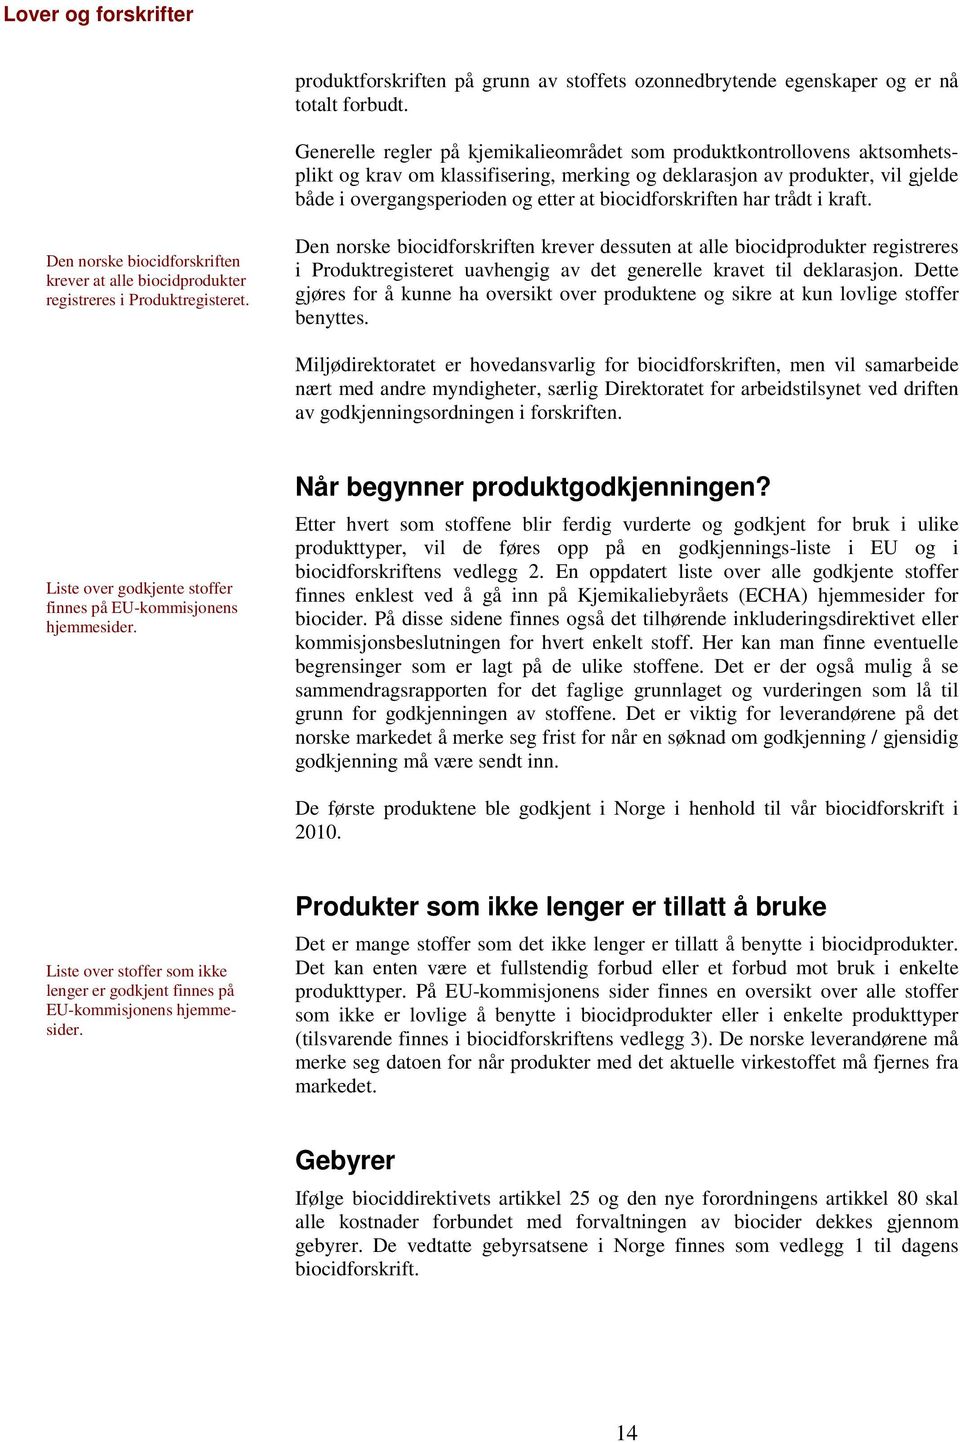 biocidforskriften har trådt i kraft. Den norske biocidforskriften krever at alle biocidprodukter registreres i Produktregisteret.